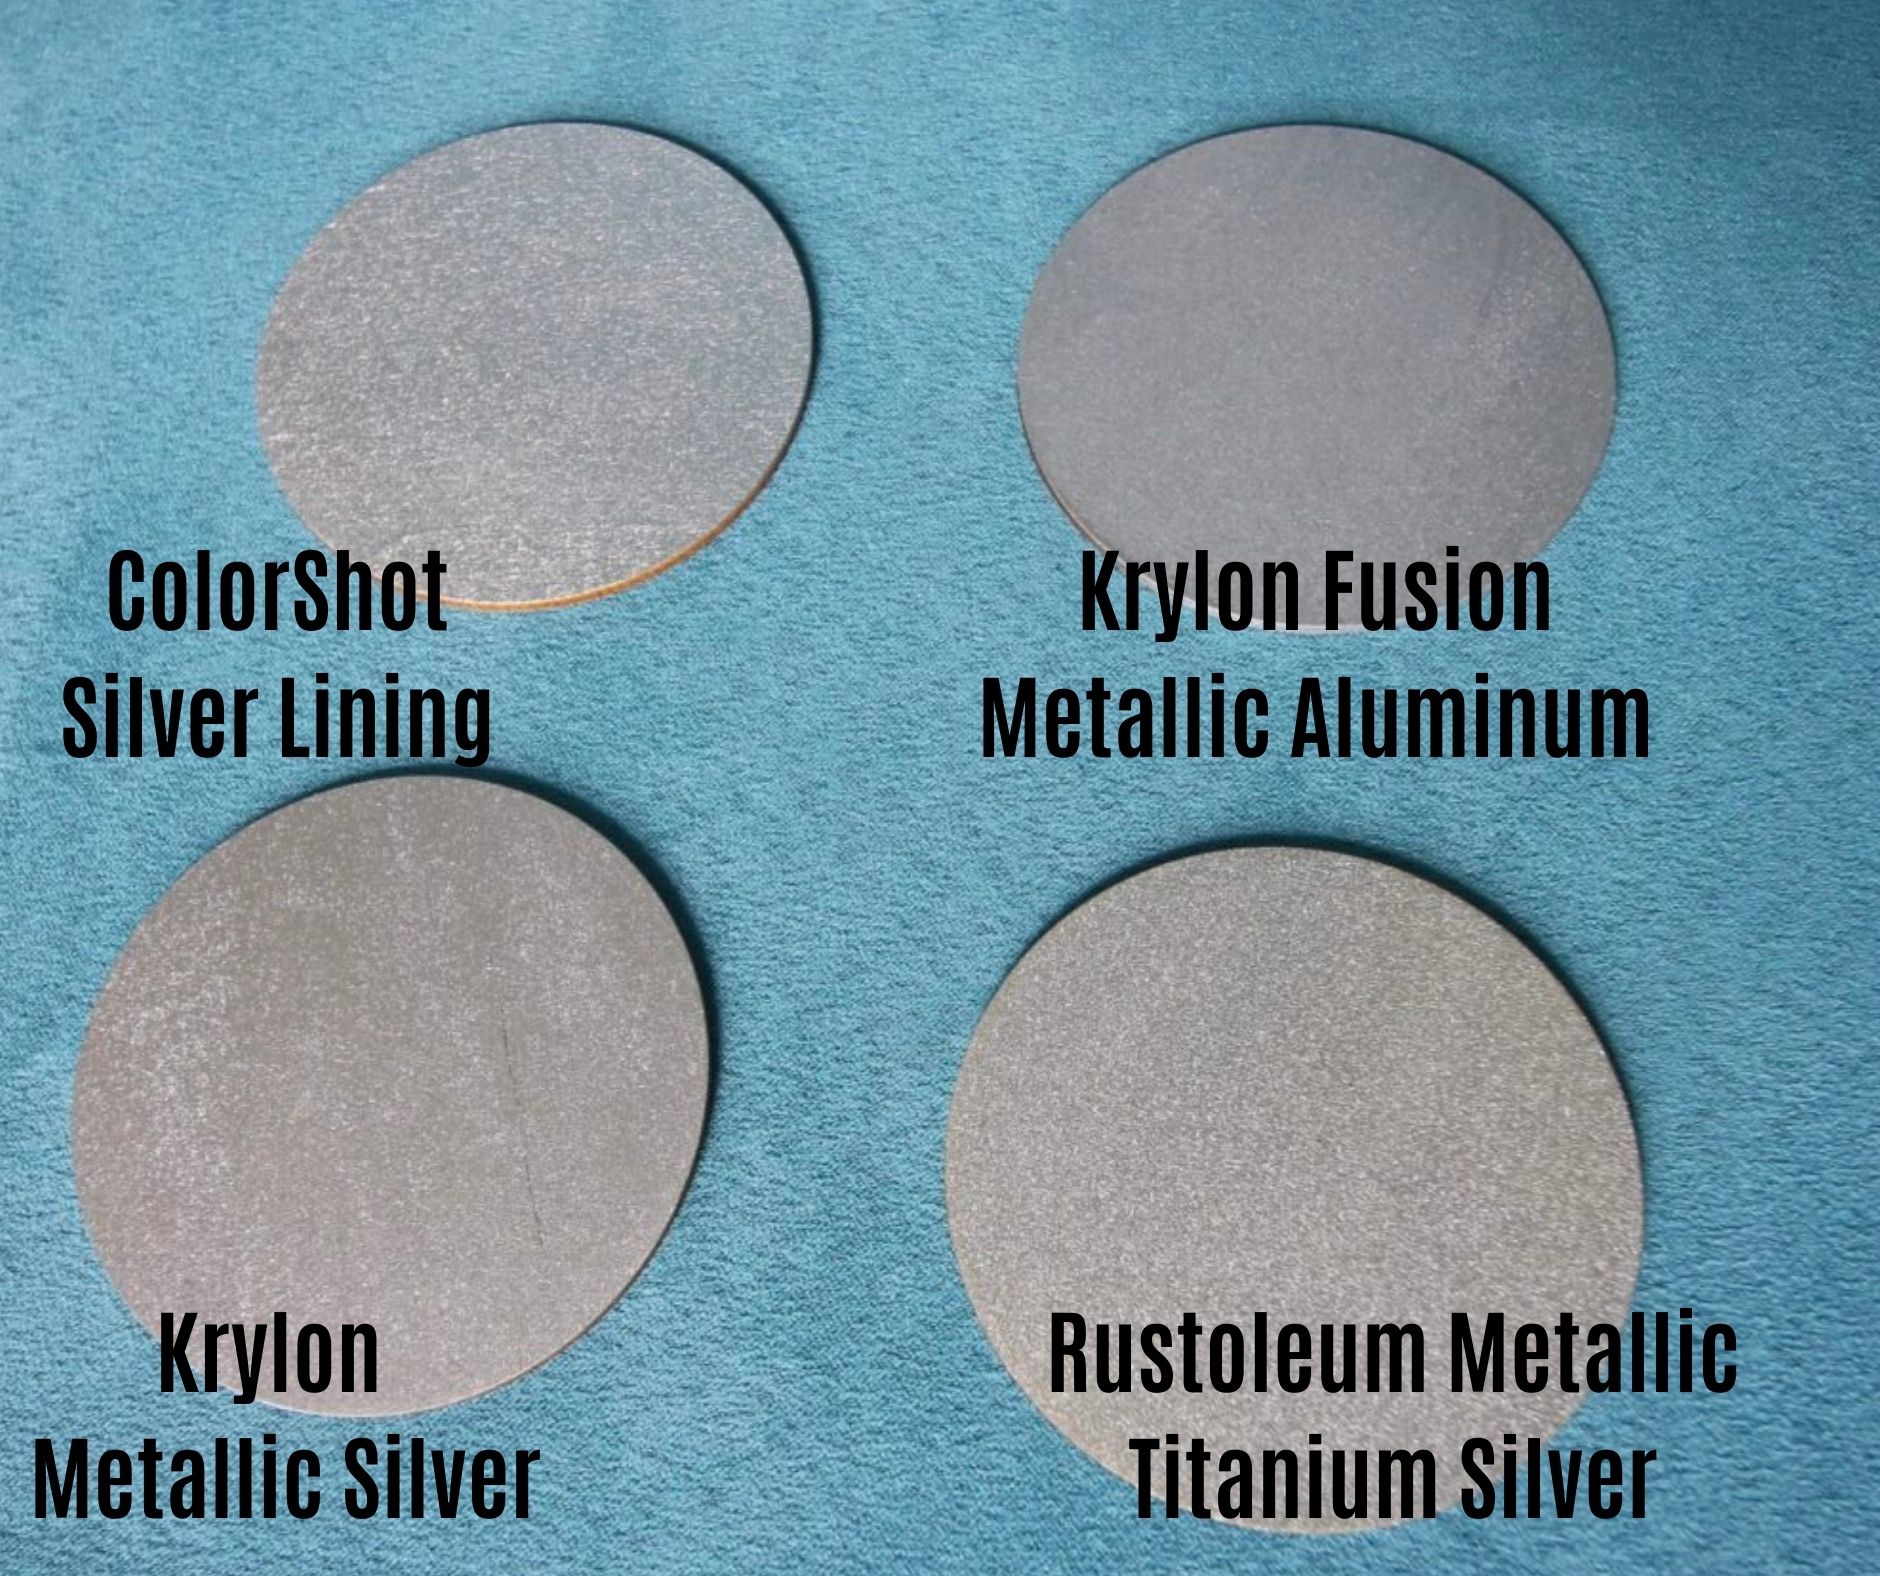 Rust-Oleum 11oz Universal Metallic Titanium Spray Paint Silver